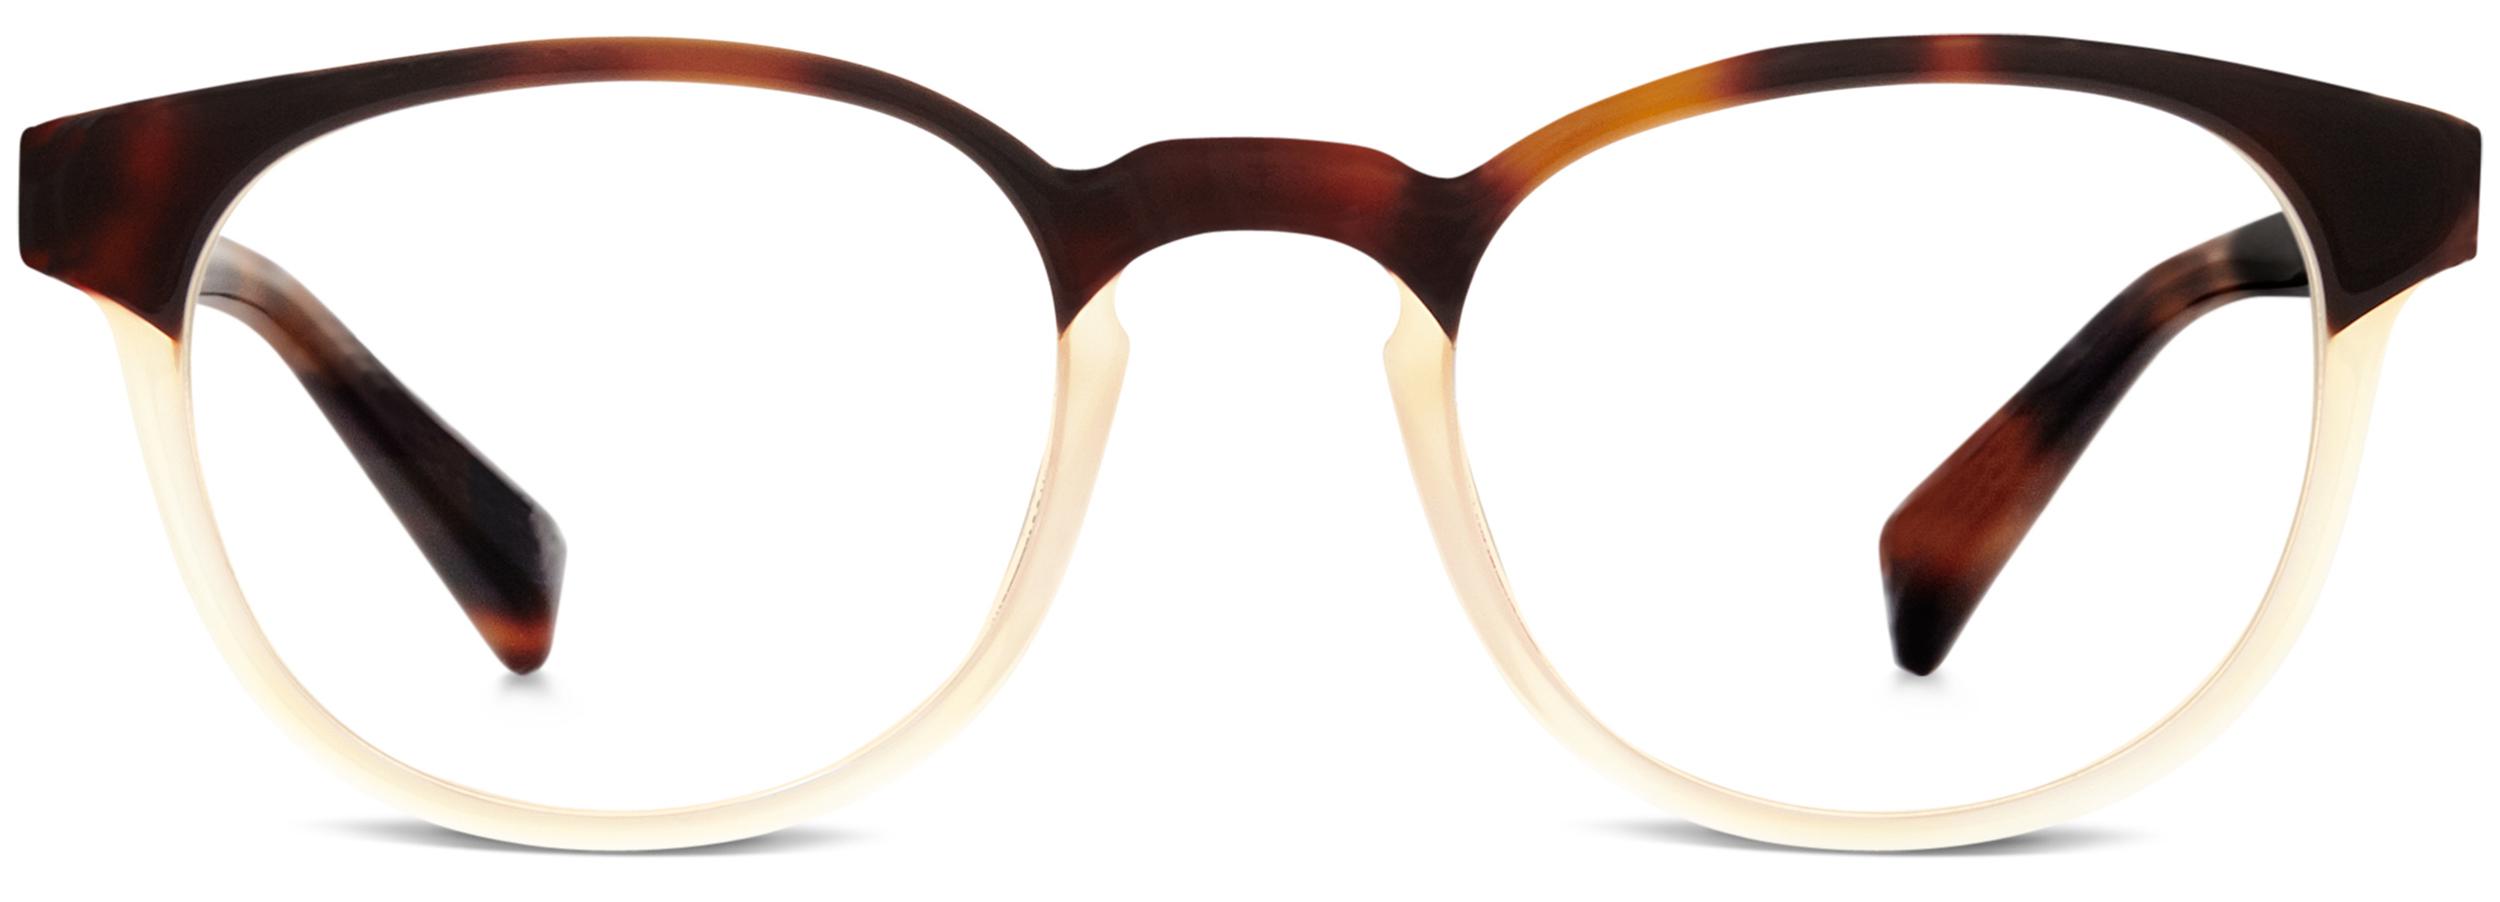 Percey Eyeglasses in Oak Barrel and Sea Salt | Warby Parker